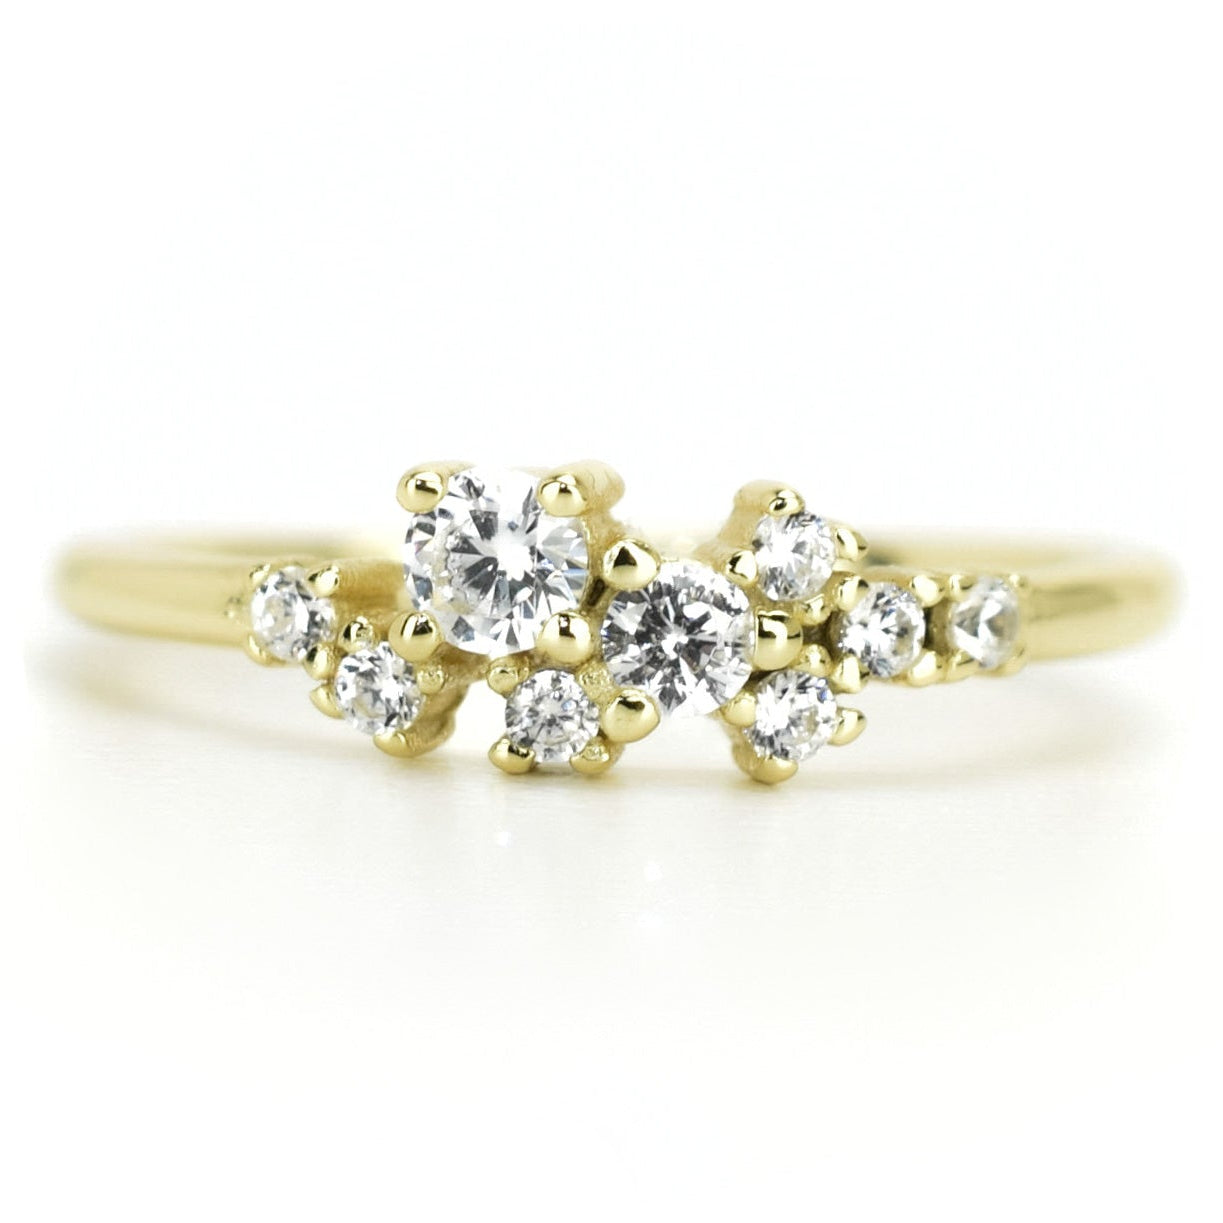 Cluster ring goud, zilveren ring met stenen, ring rosegoud, unieke ring, dames ring, gouden dames ring, zilveren feestelijke ring, promise ring goud, verlovingsring zilver